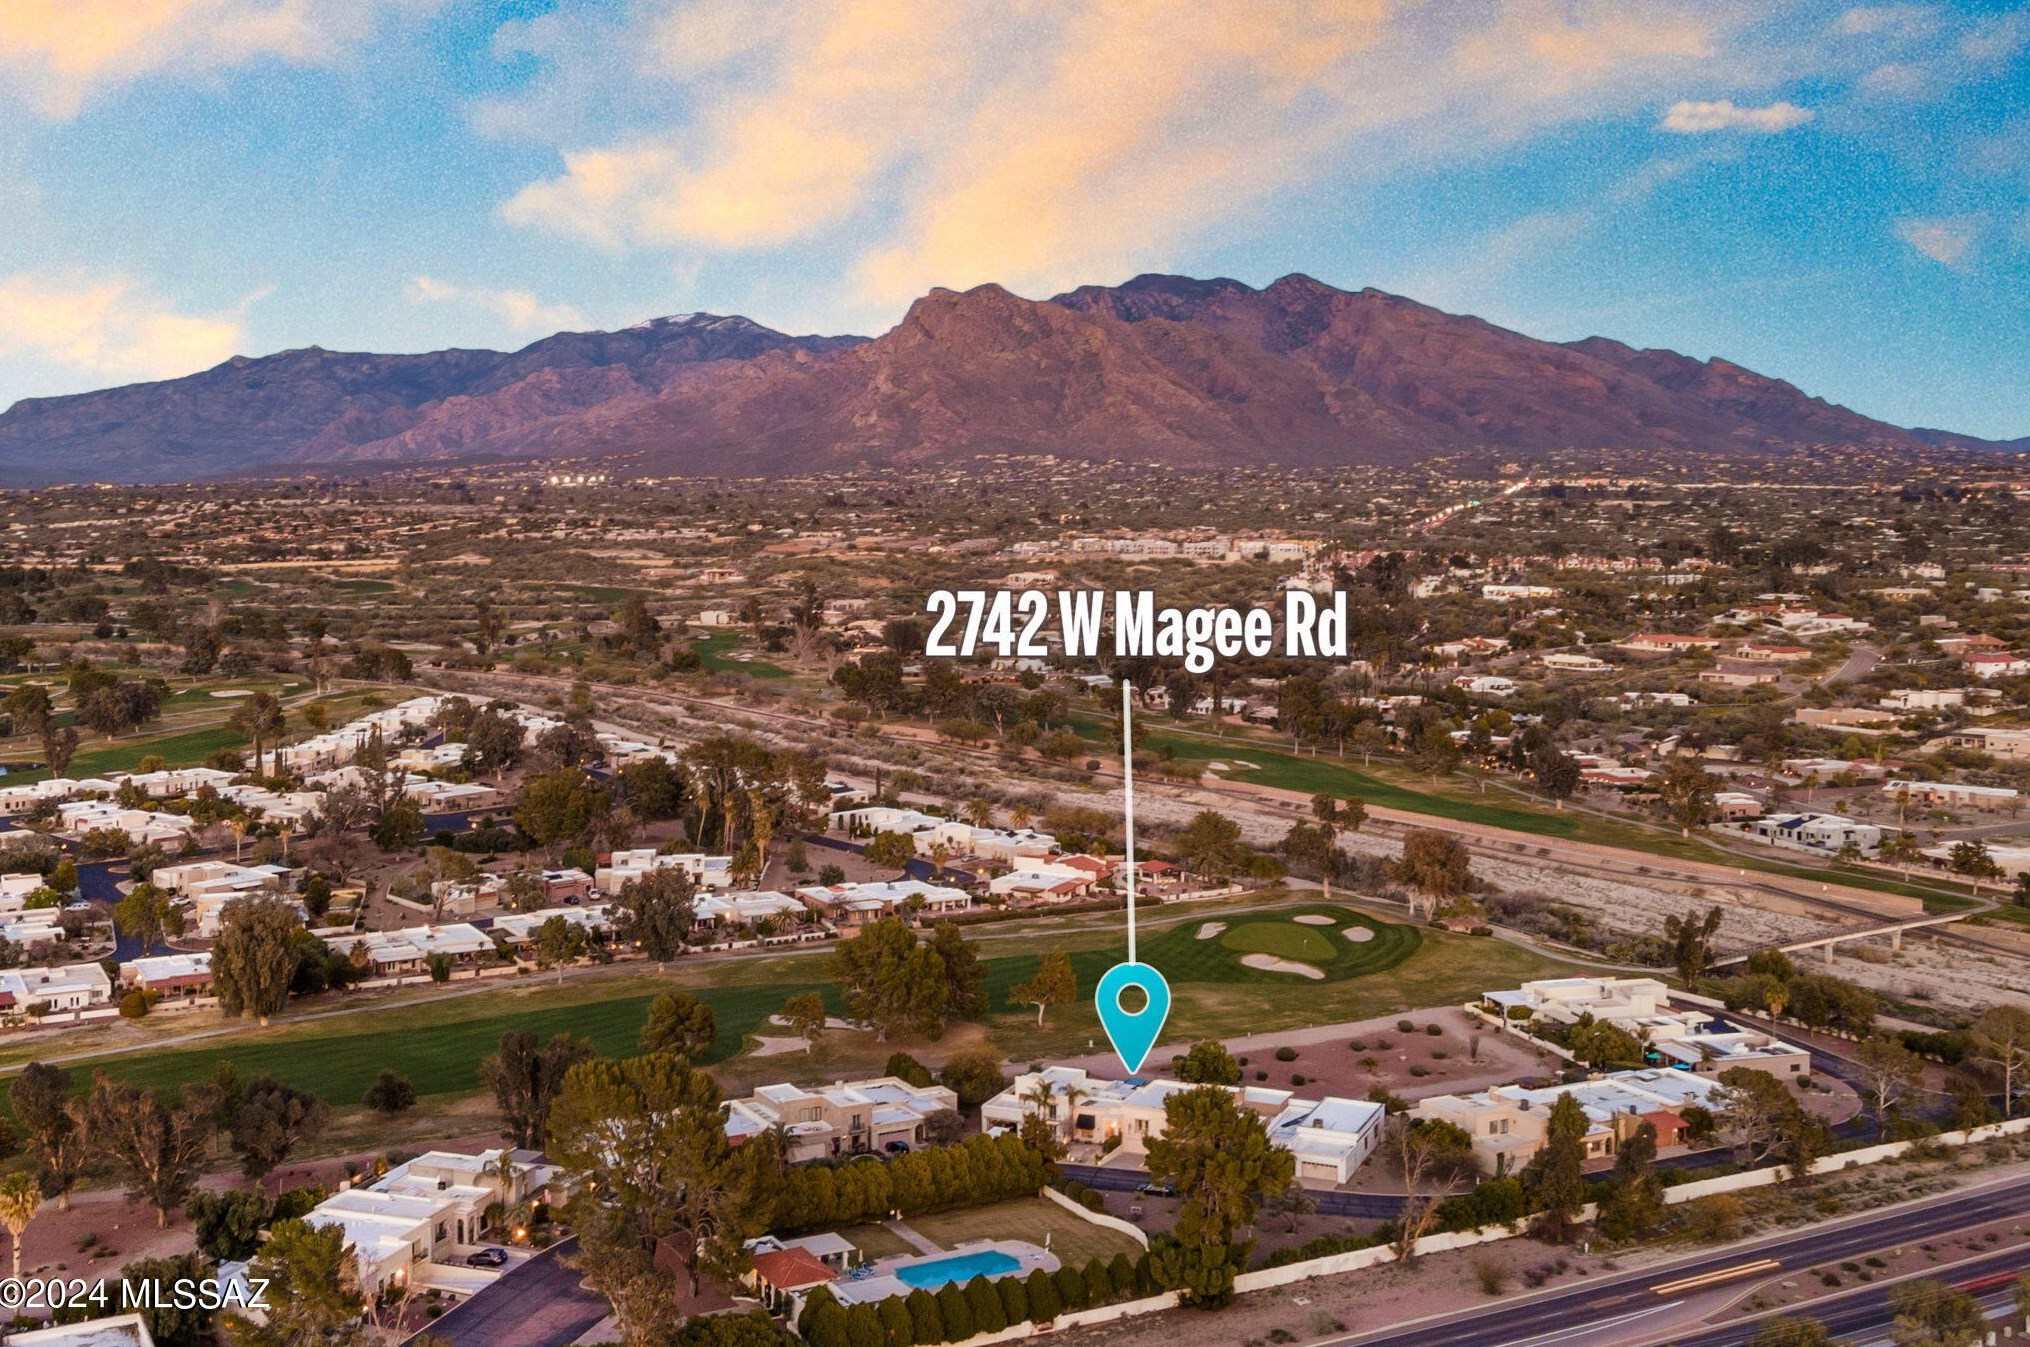 2742 W Magee Rd, Tucson, AZ 85742